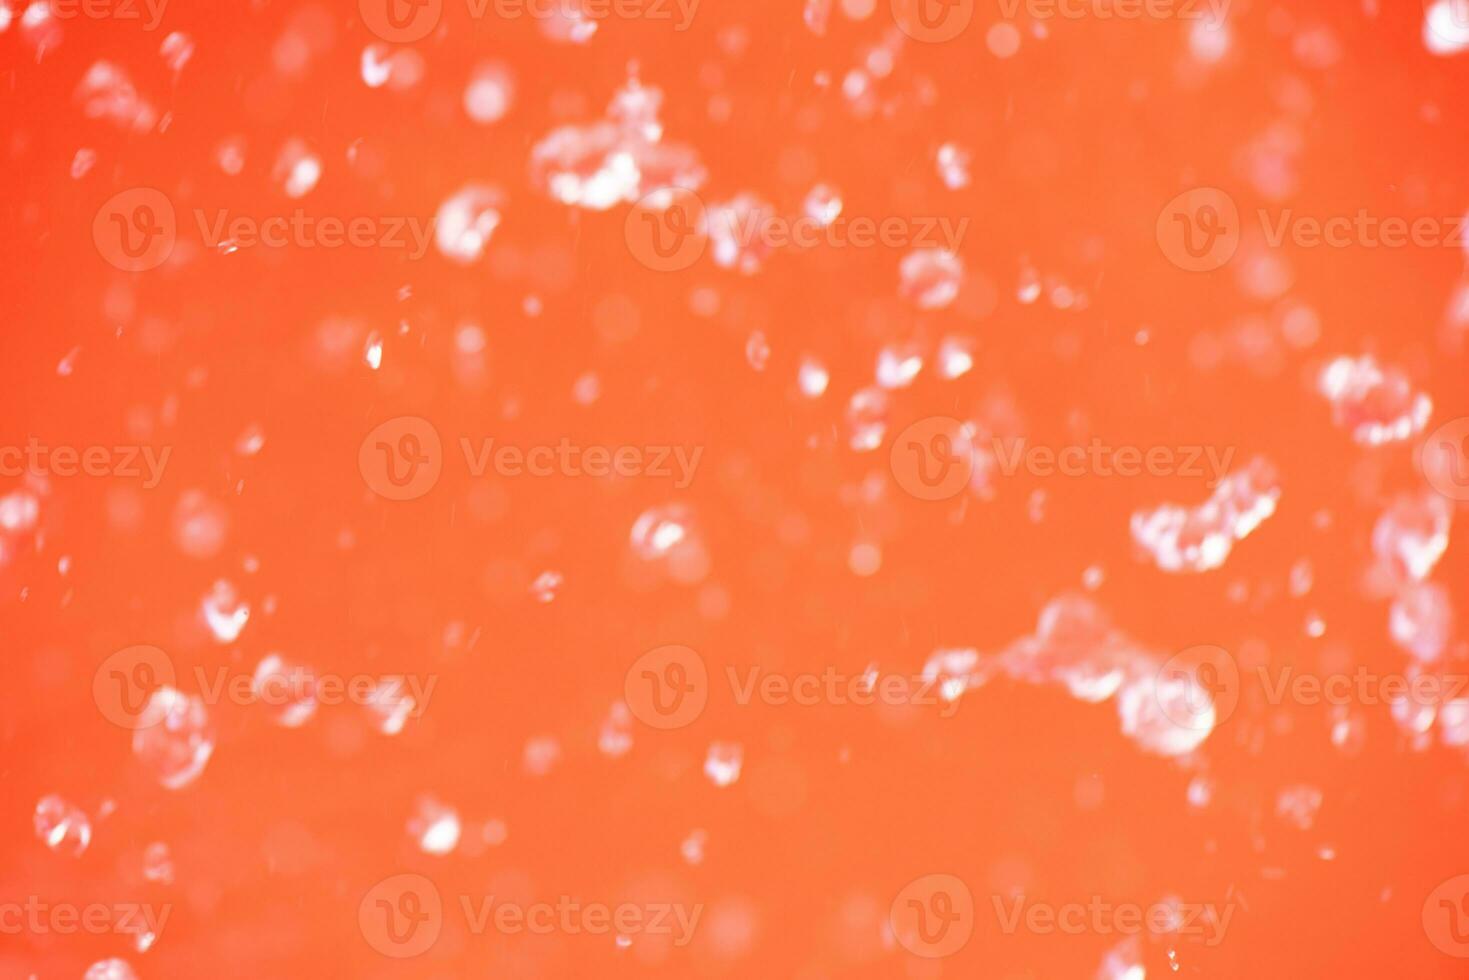 naranja agua con ondas en el superficie. desenfocar borroso transparente blanco negro de colores claro calma agua superficie textura con chapoteo y burbujas agua olas con brillante modelo textura antecedentes. foto